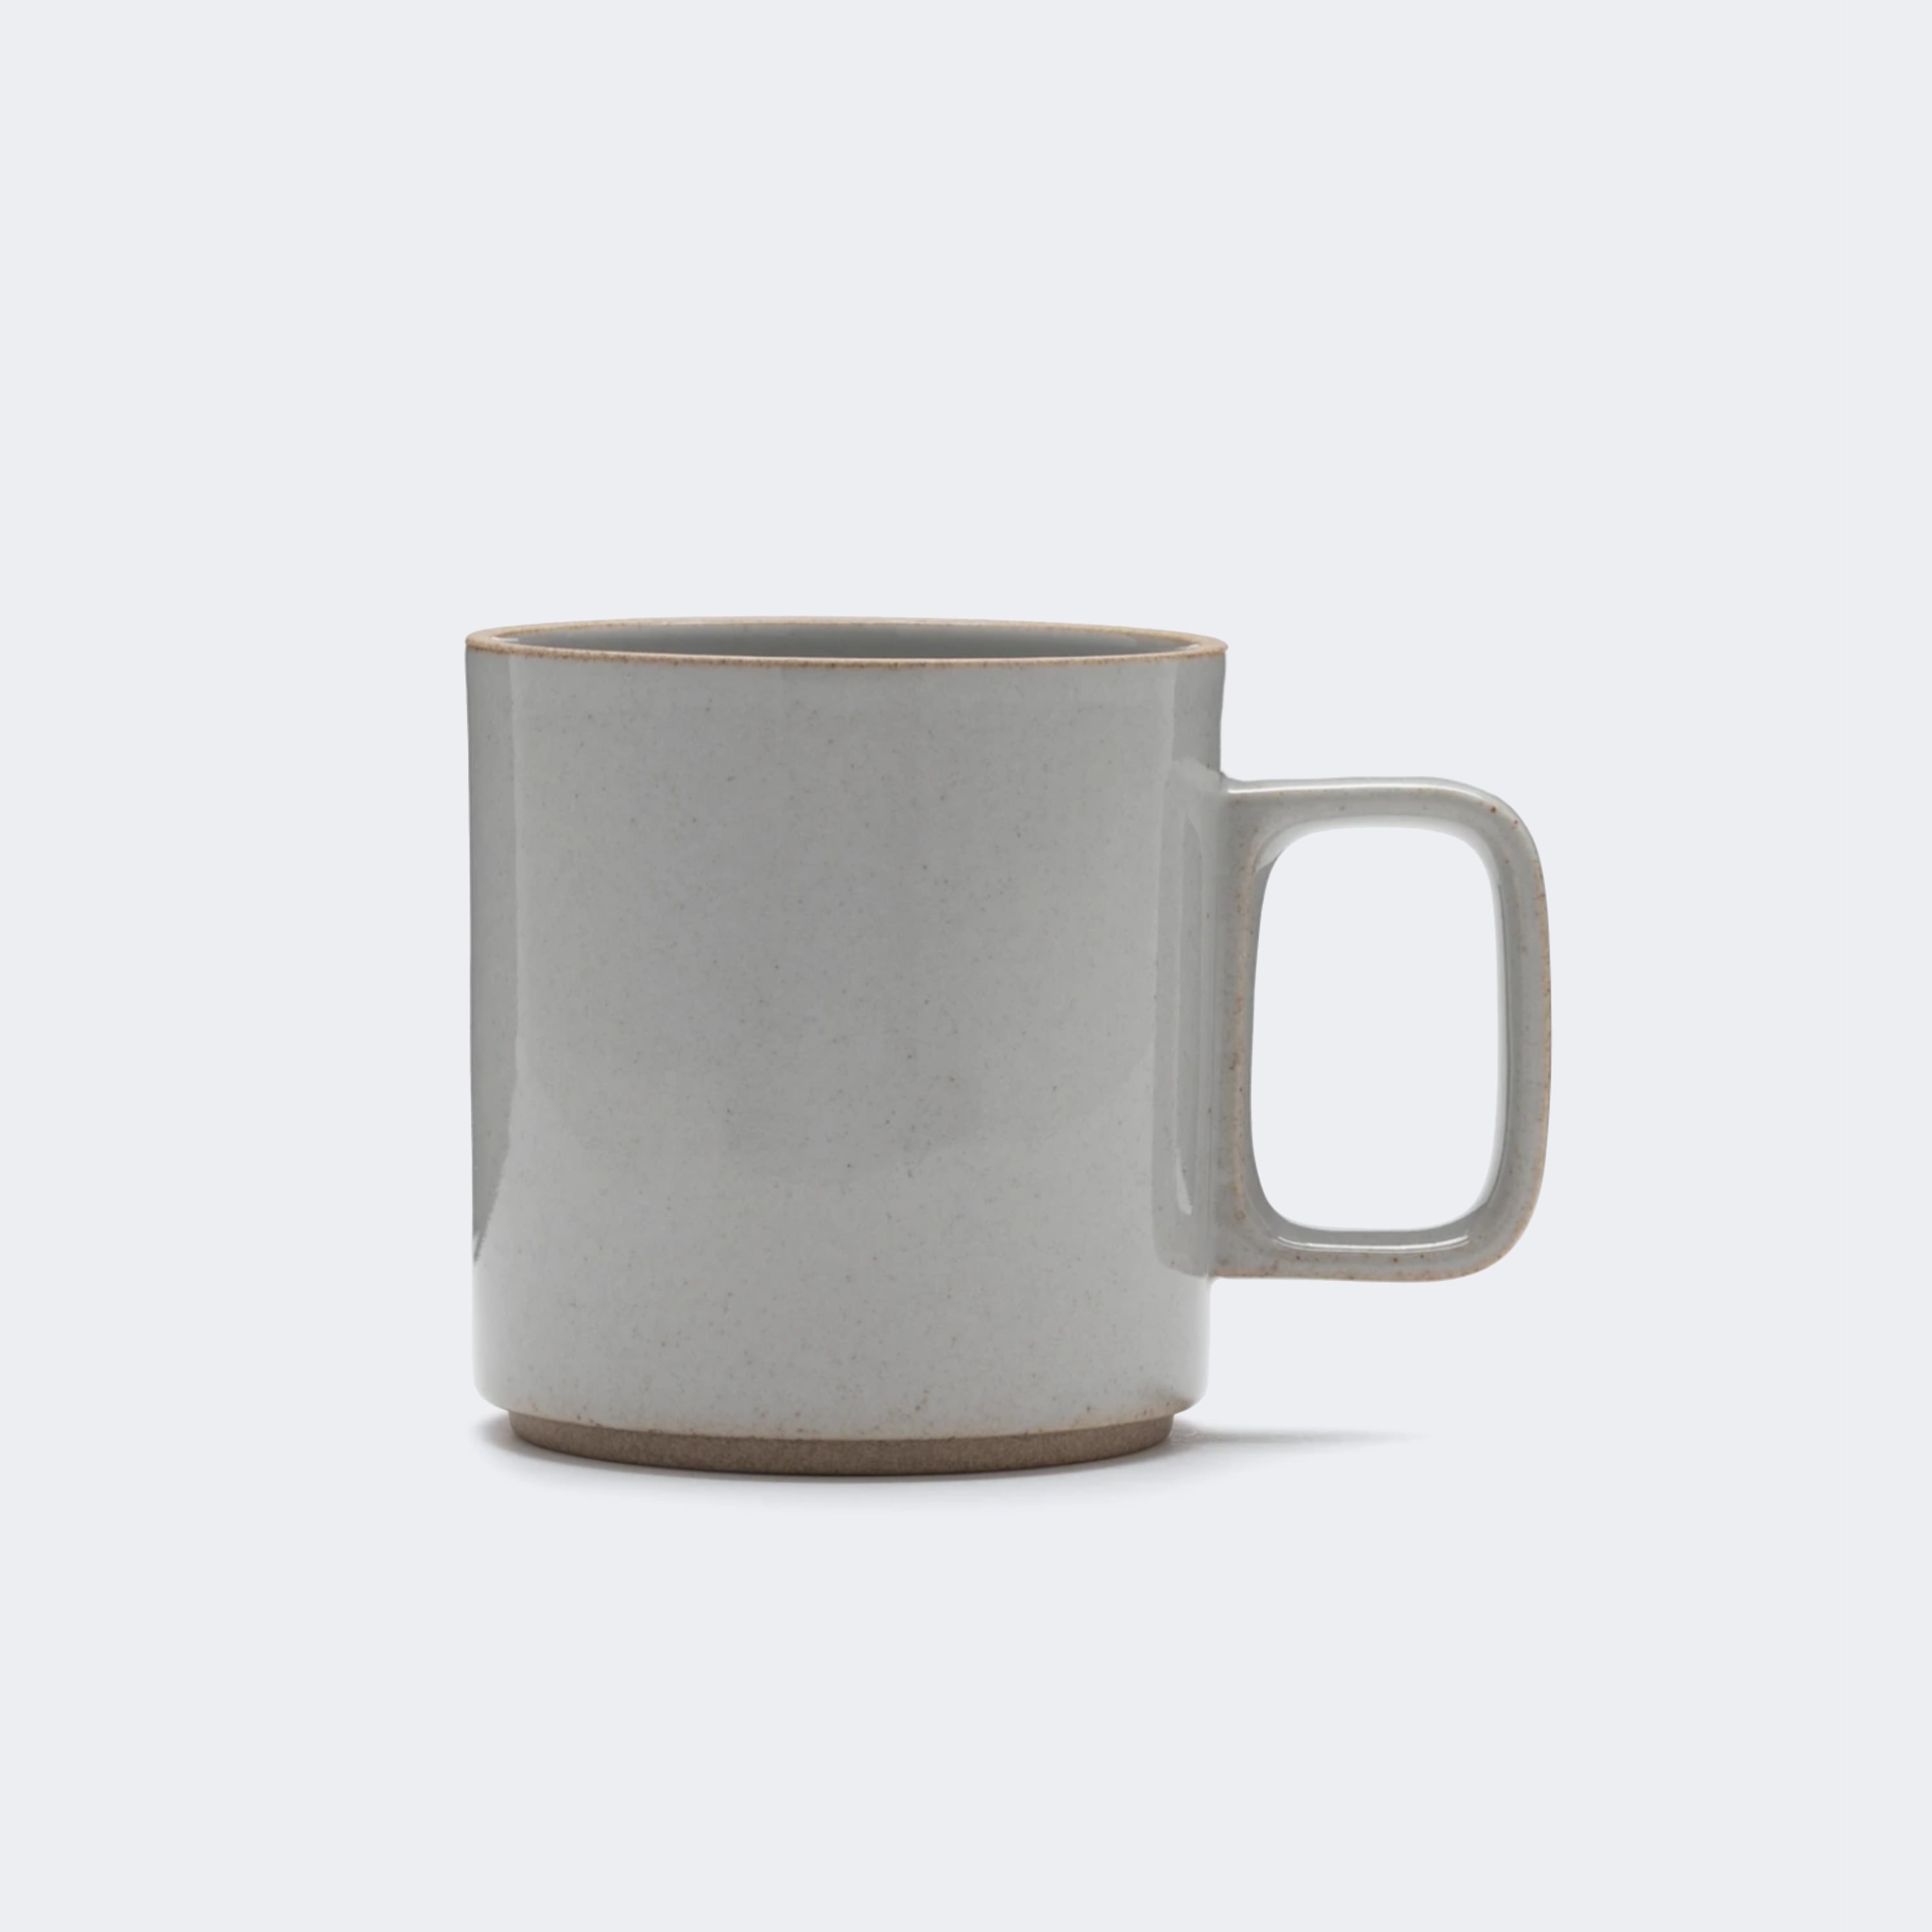 Hasami Porcelain Mug in Gloss Gray 13 oz. - KANSO#select size_13 oz.